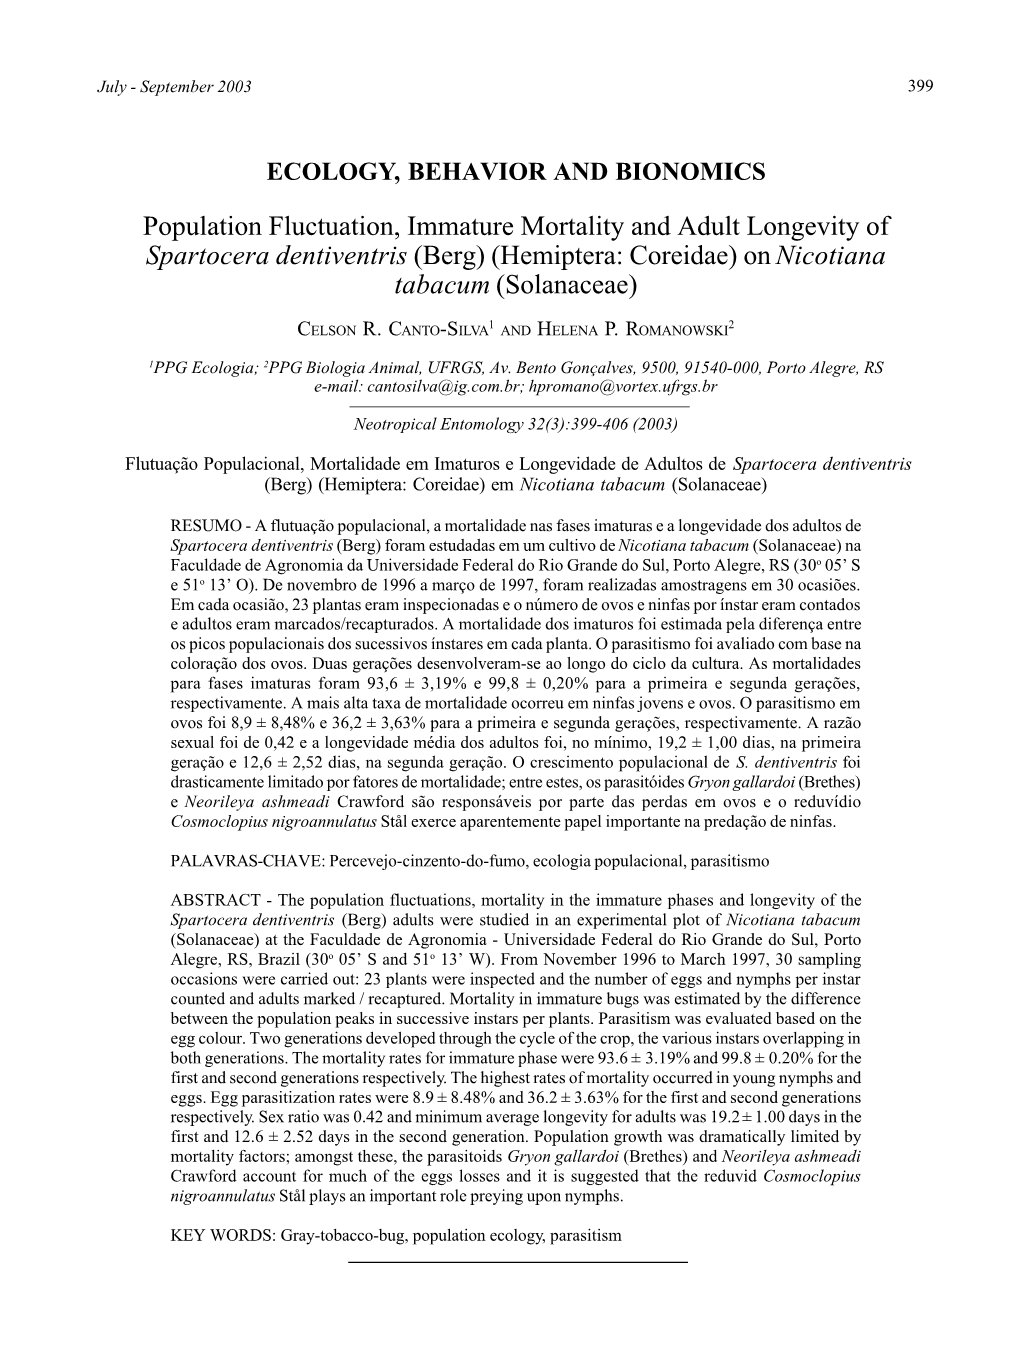 Population Fluctuation, Immature Mortality and Adult Longevity of Spartocera Dentiventris (Berg) (Hemiptera: Coreidae) on Nicotiana Tabacum (Solanaceae)